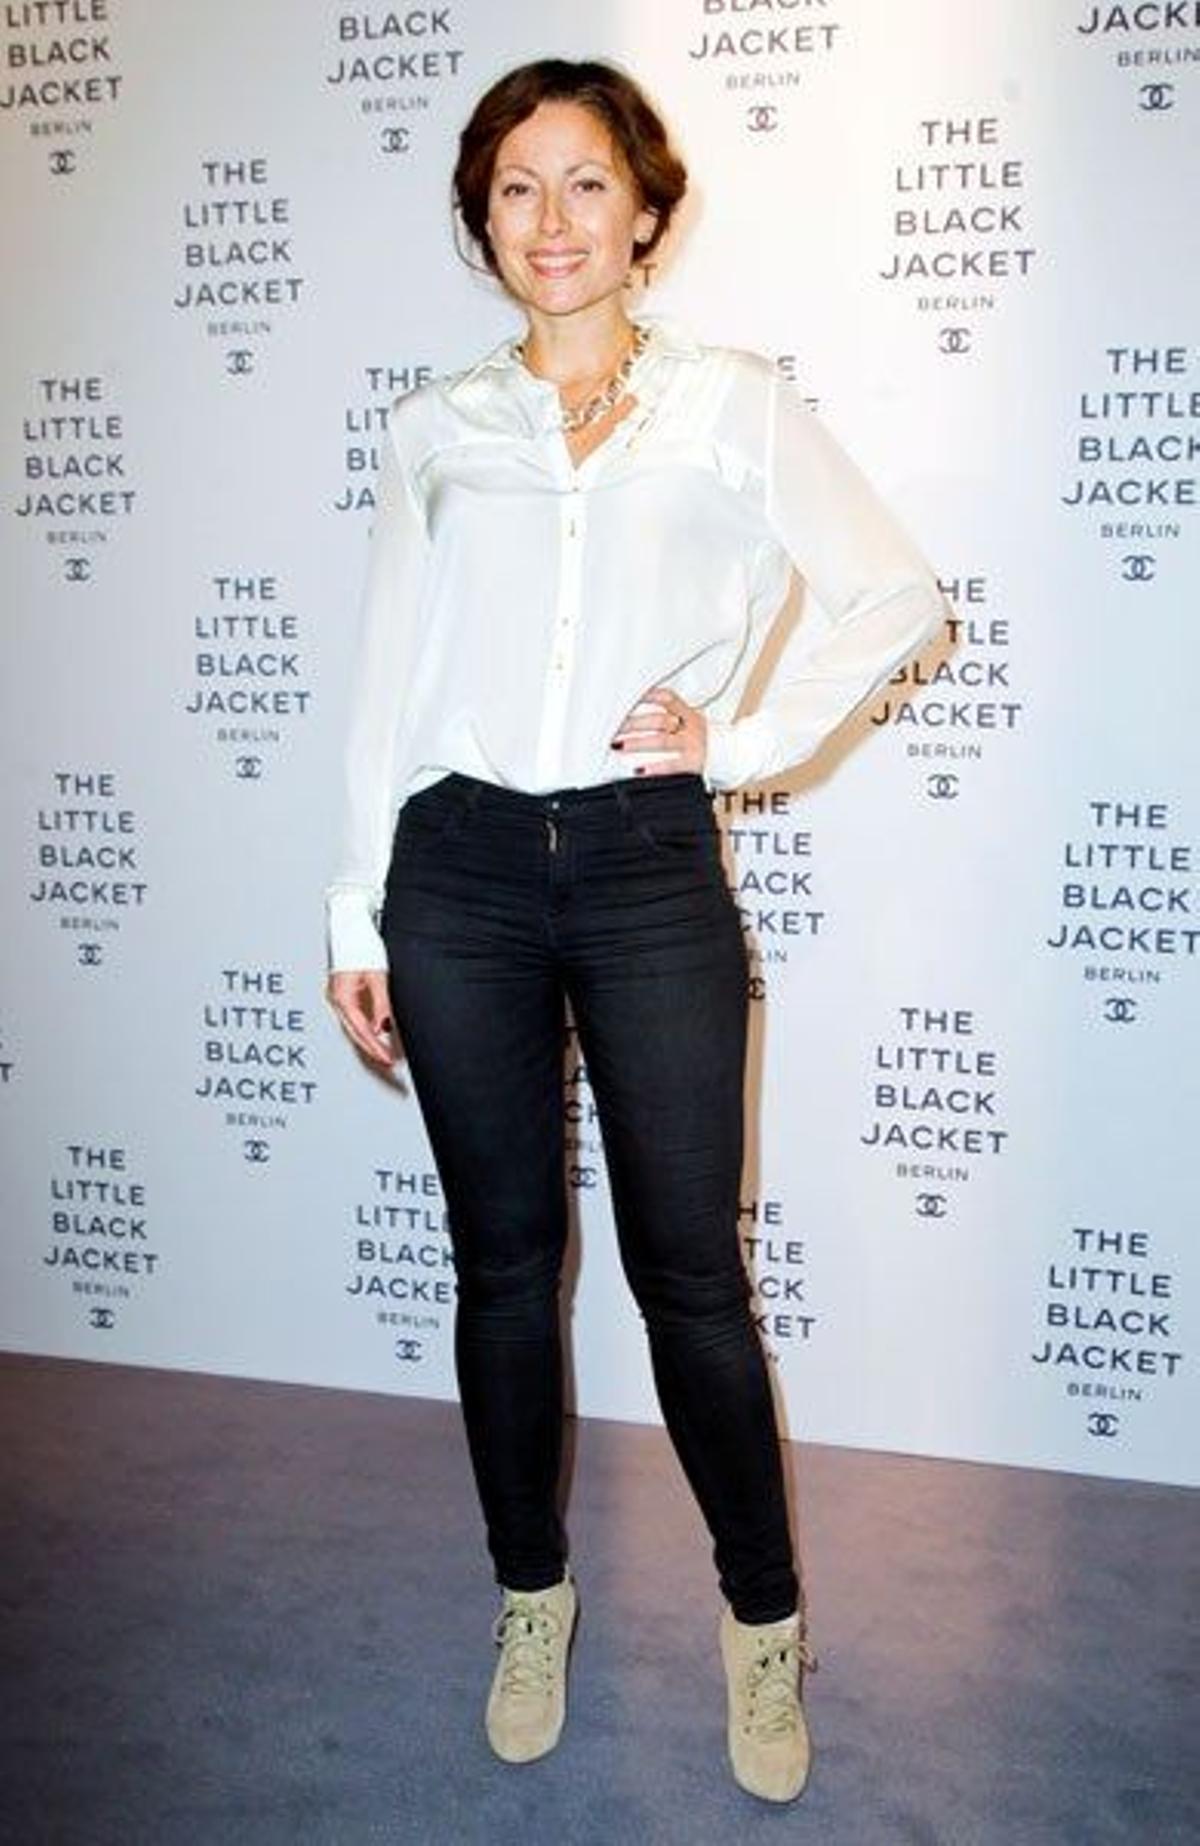 Chanel Little Black Jacket